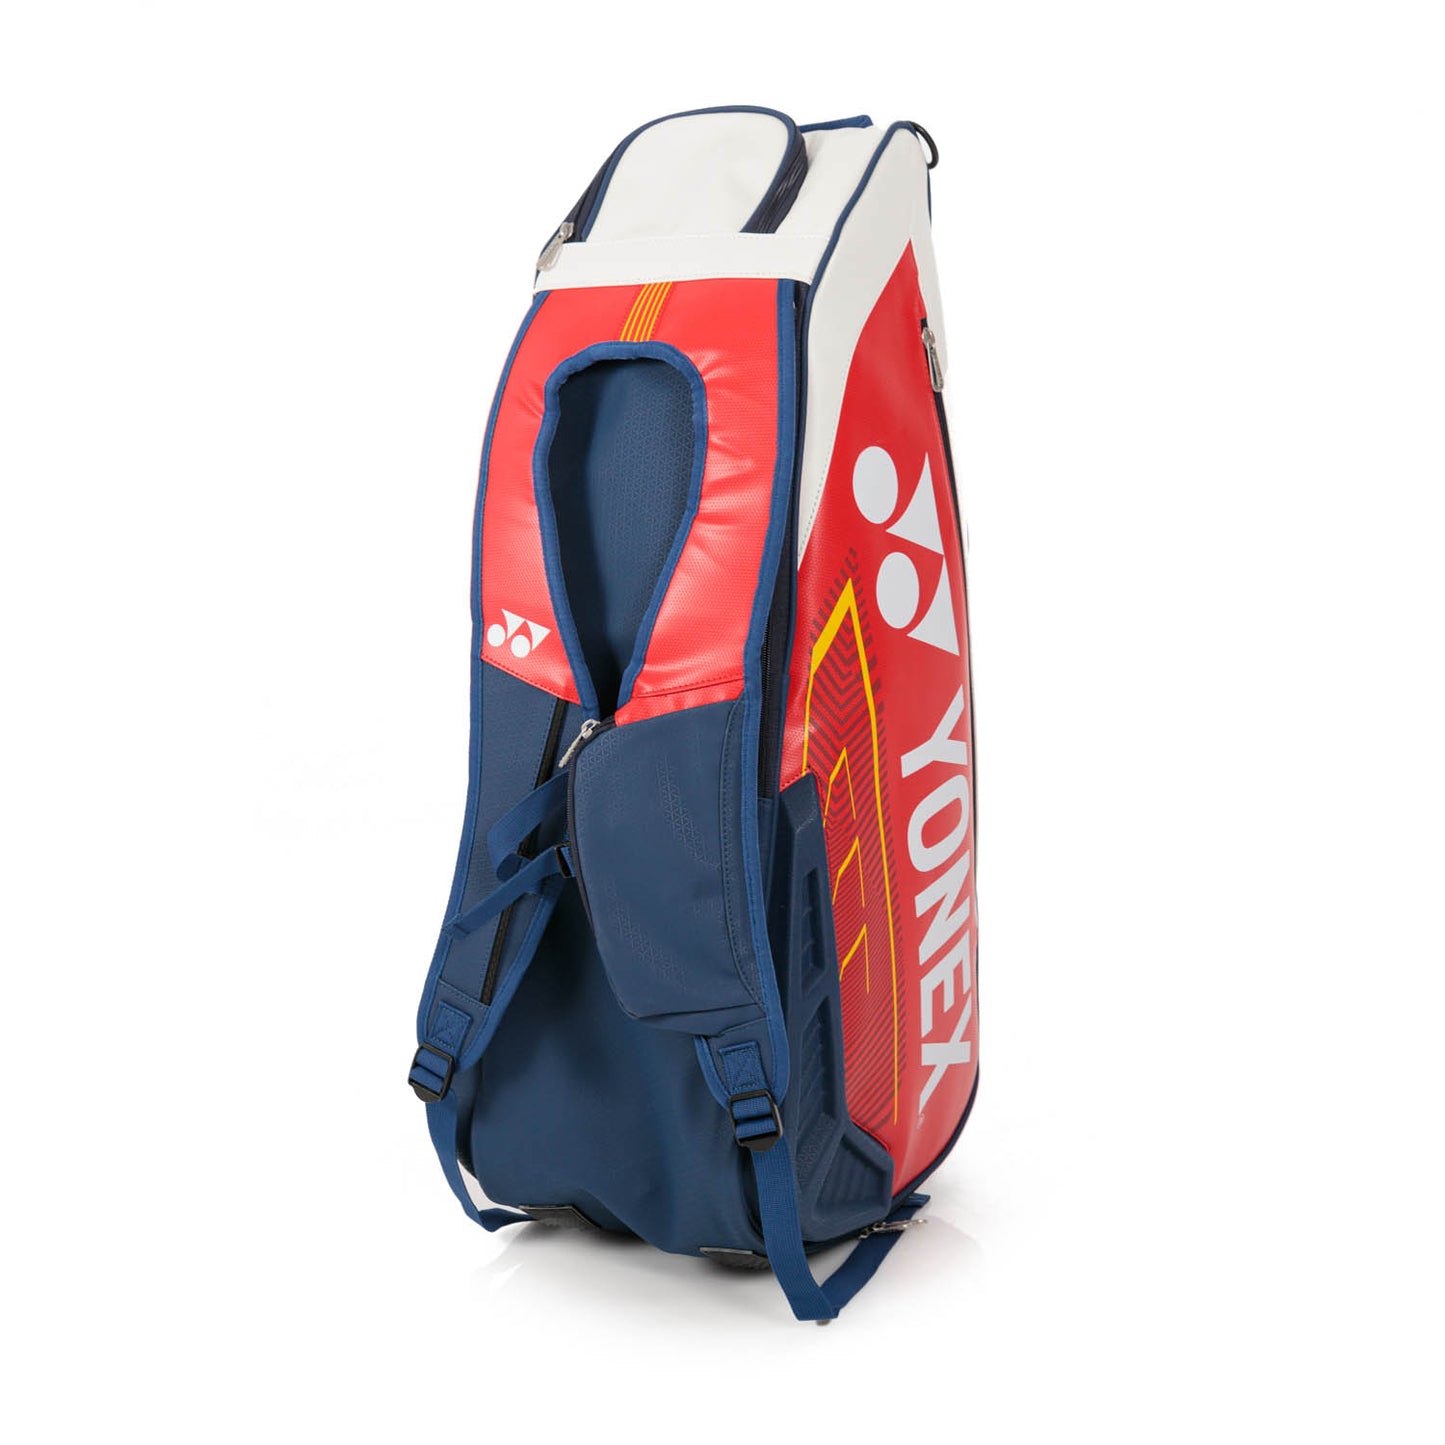 YONEX Expert Racquet Bag BAG02326 [White/Navy/Red]